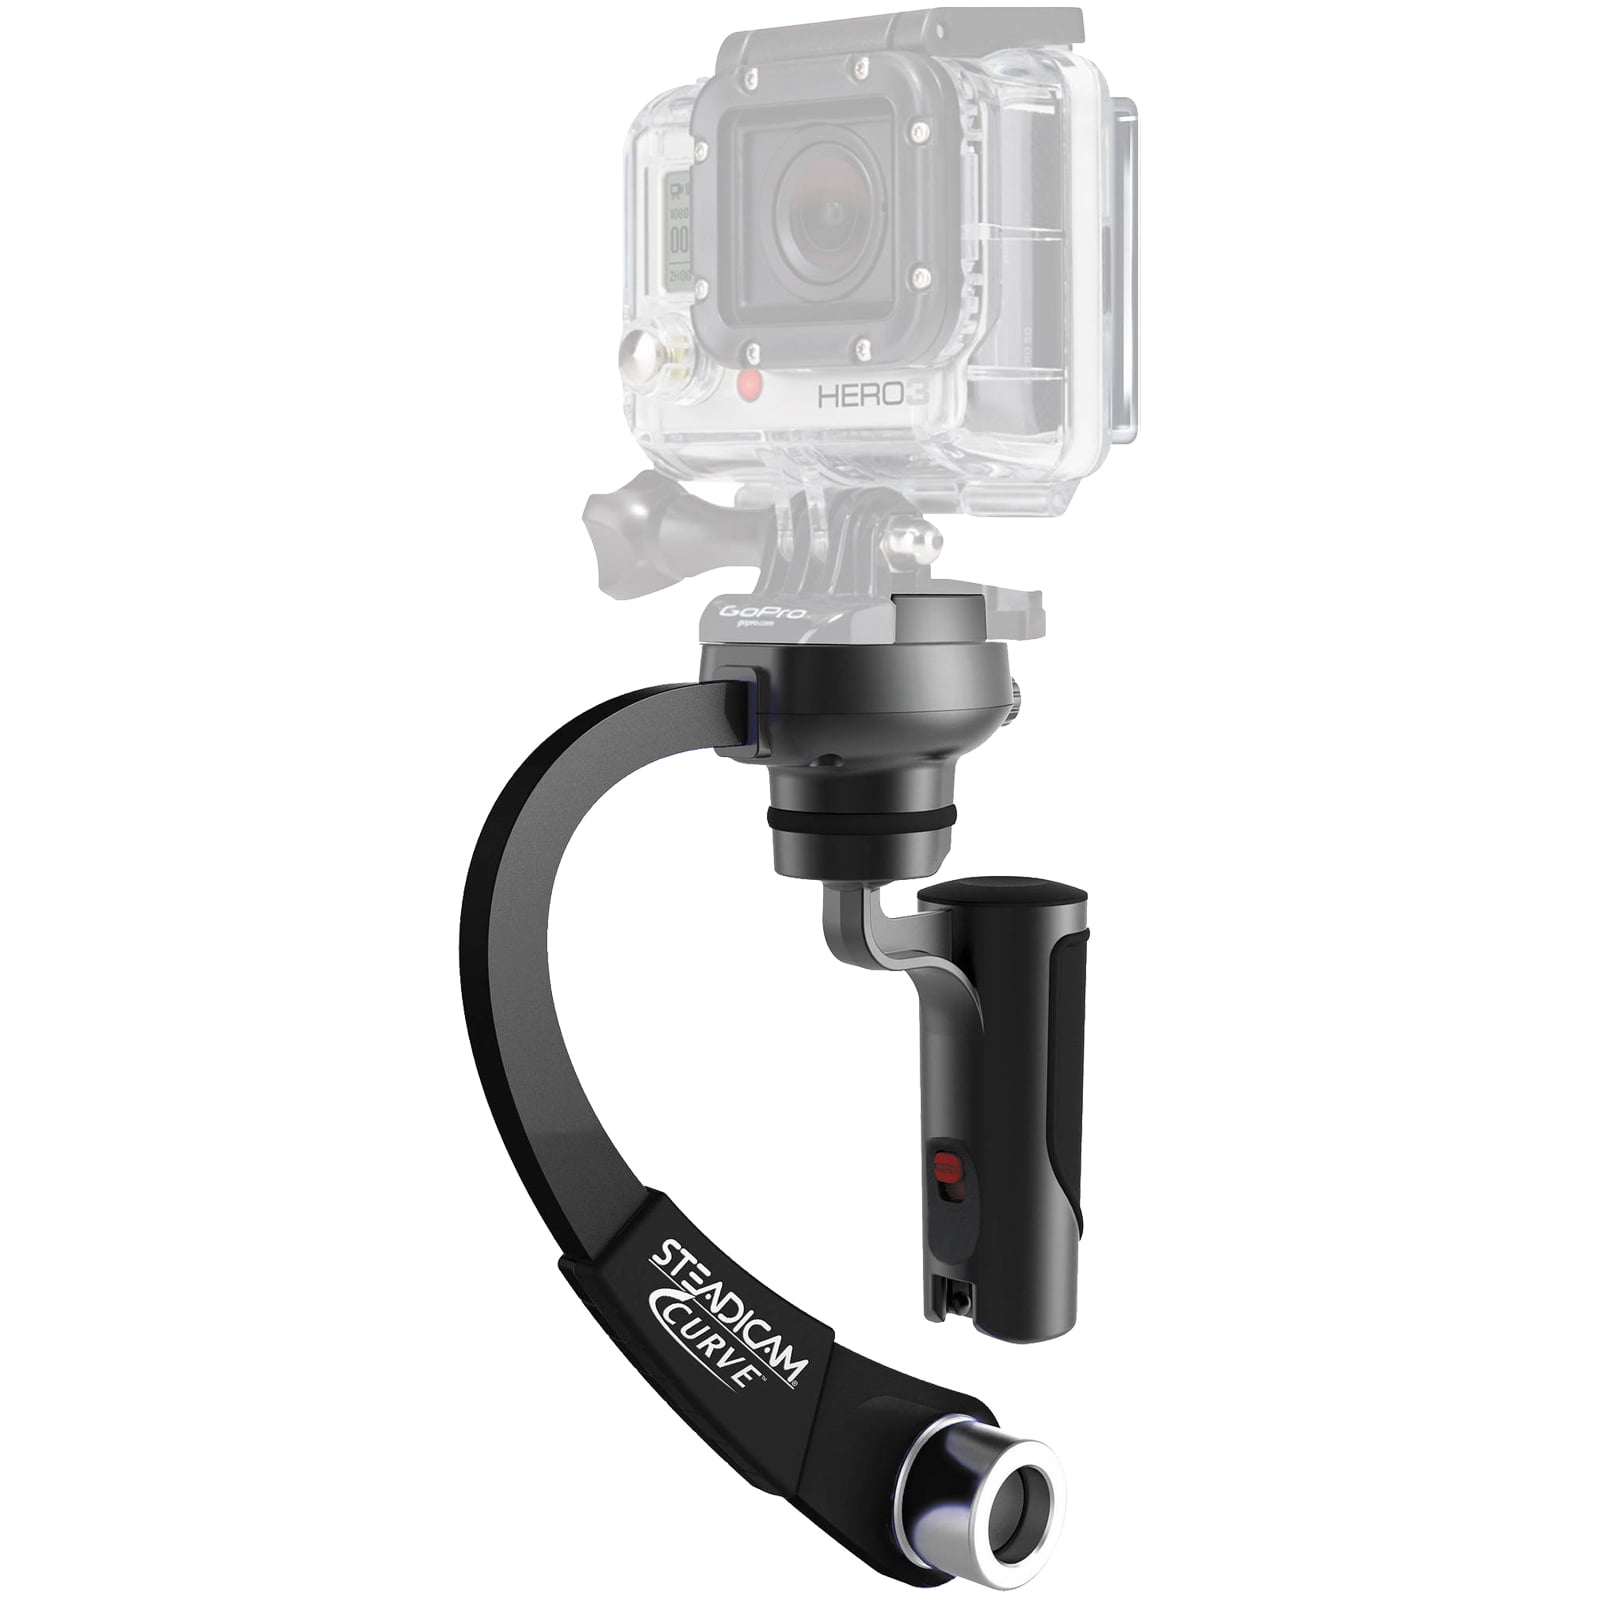 Handheld Video Camera Steady Stabilizer+Mount Holder for GoPro Hero 5 4 